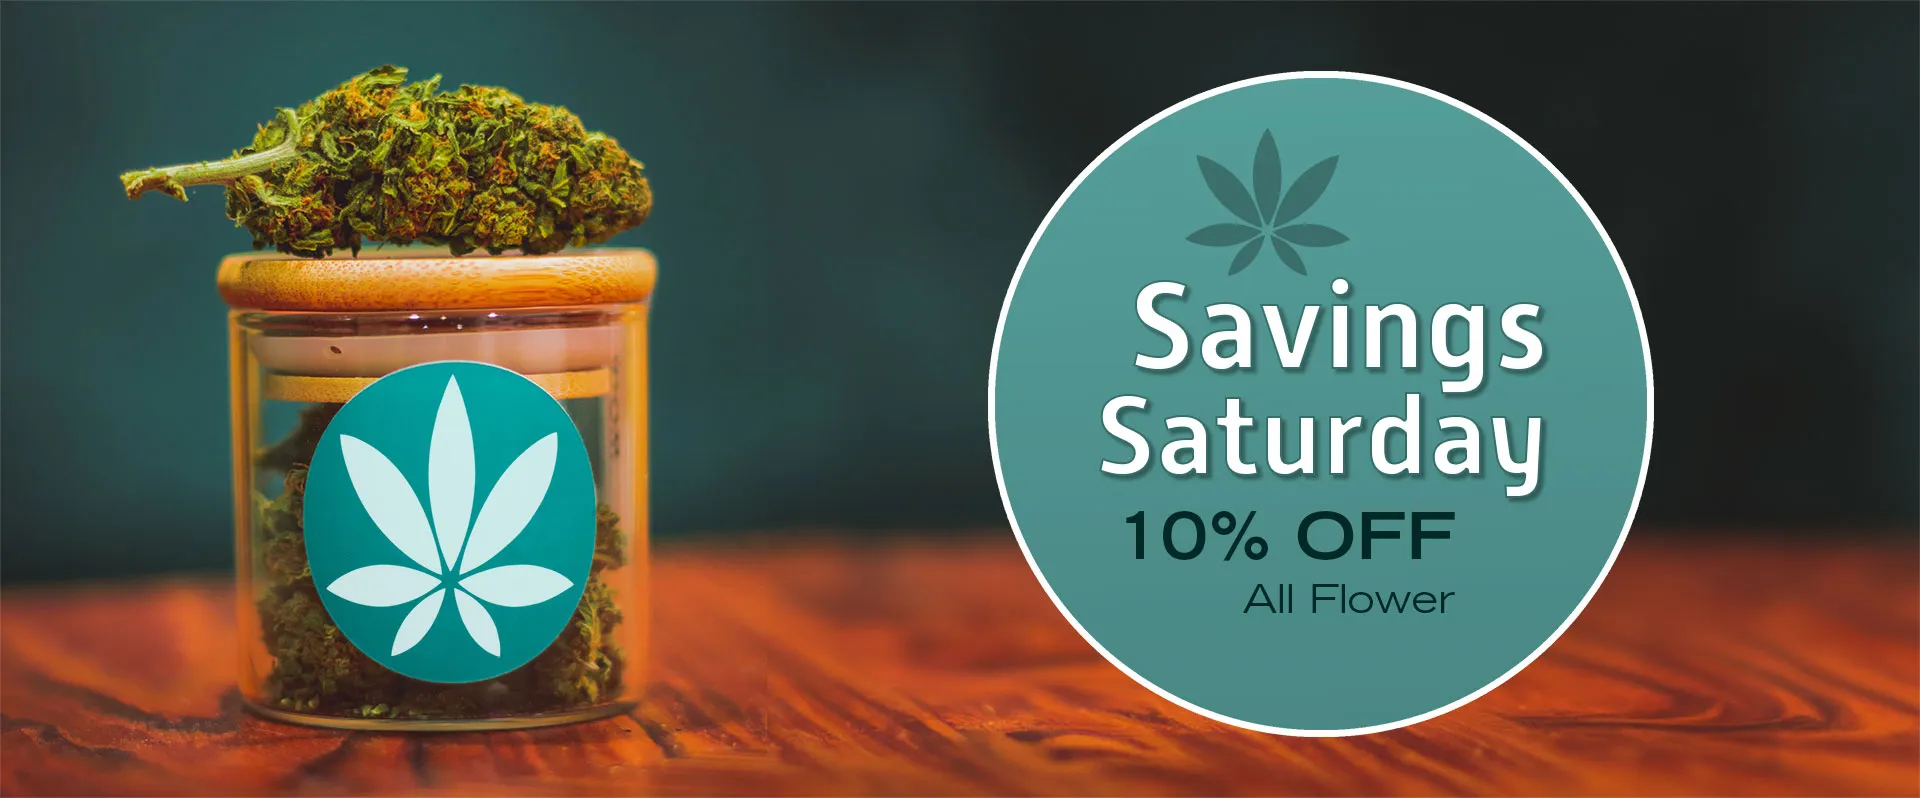 Saturday Deals Marijuana Flower Cannabis Plus Kamloops